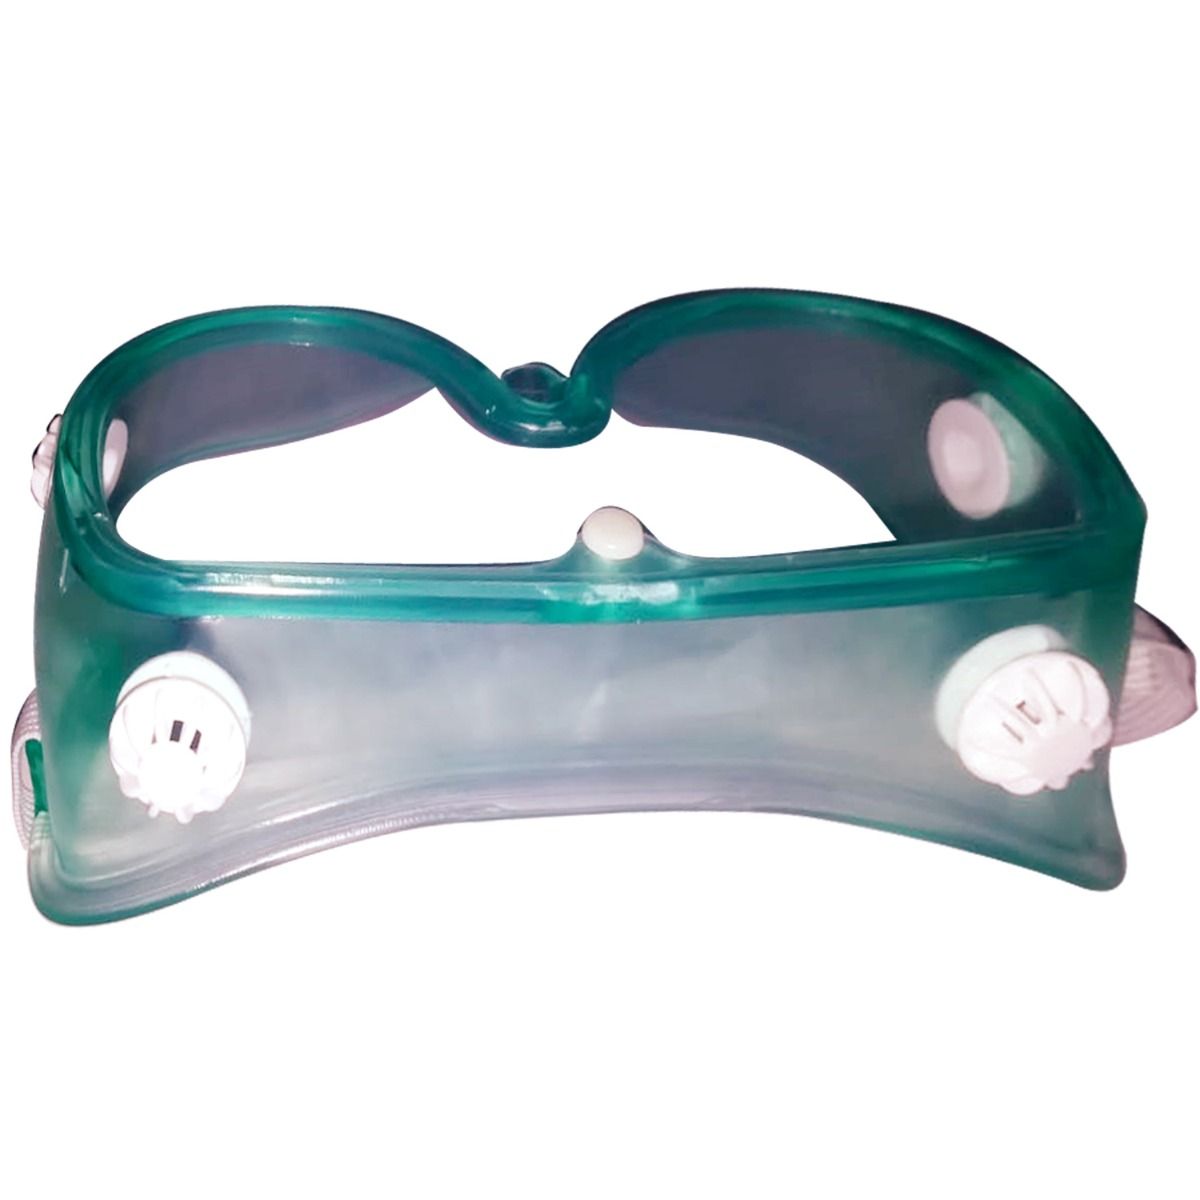 Buy Kabrion Splash Protective Goggles, 1 Count Online